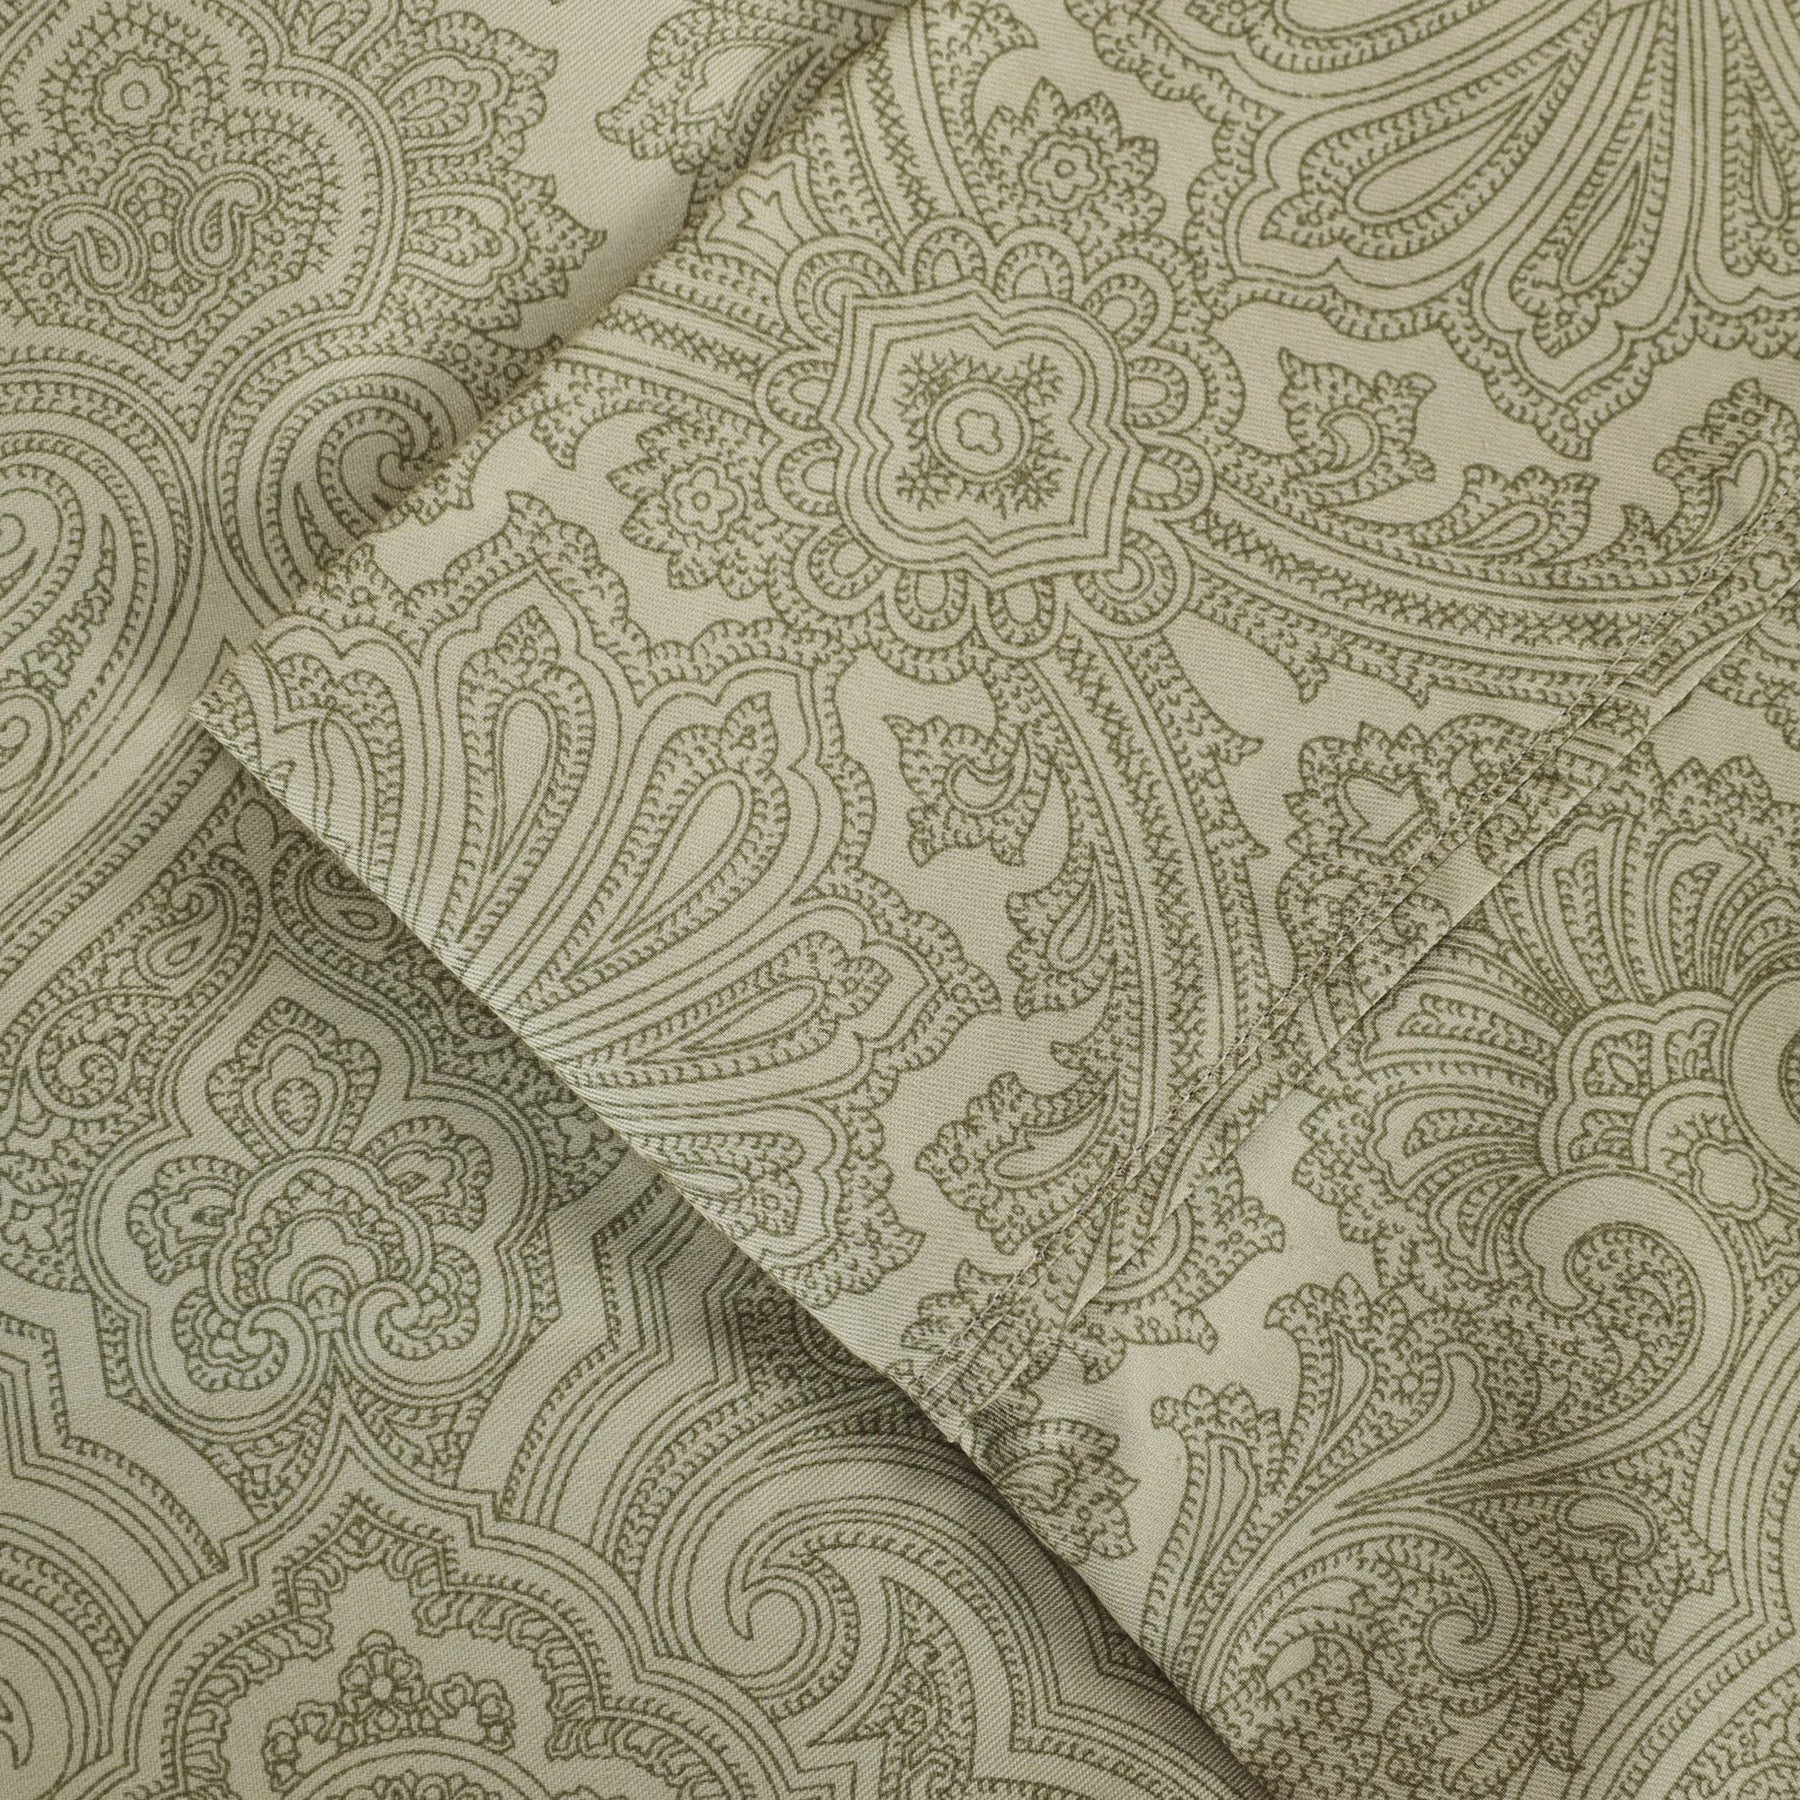 Italian Paisley 600 Thread Count Cotton Blend Deep Pocket Sheet Set - Sage